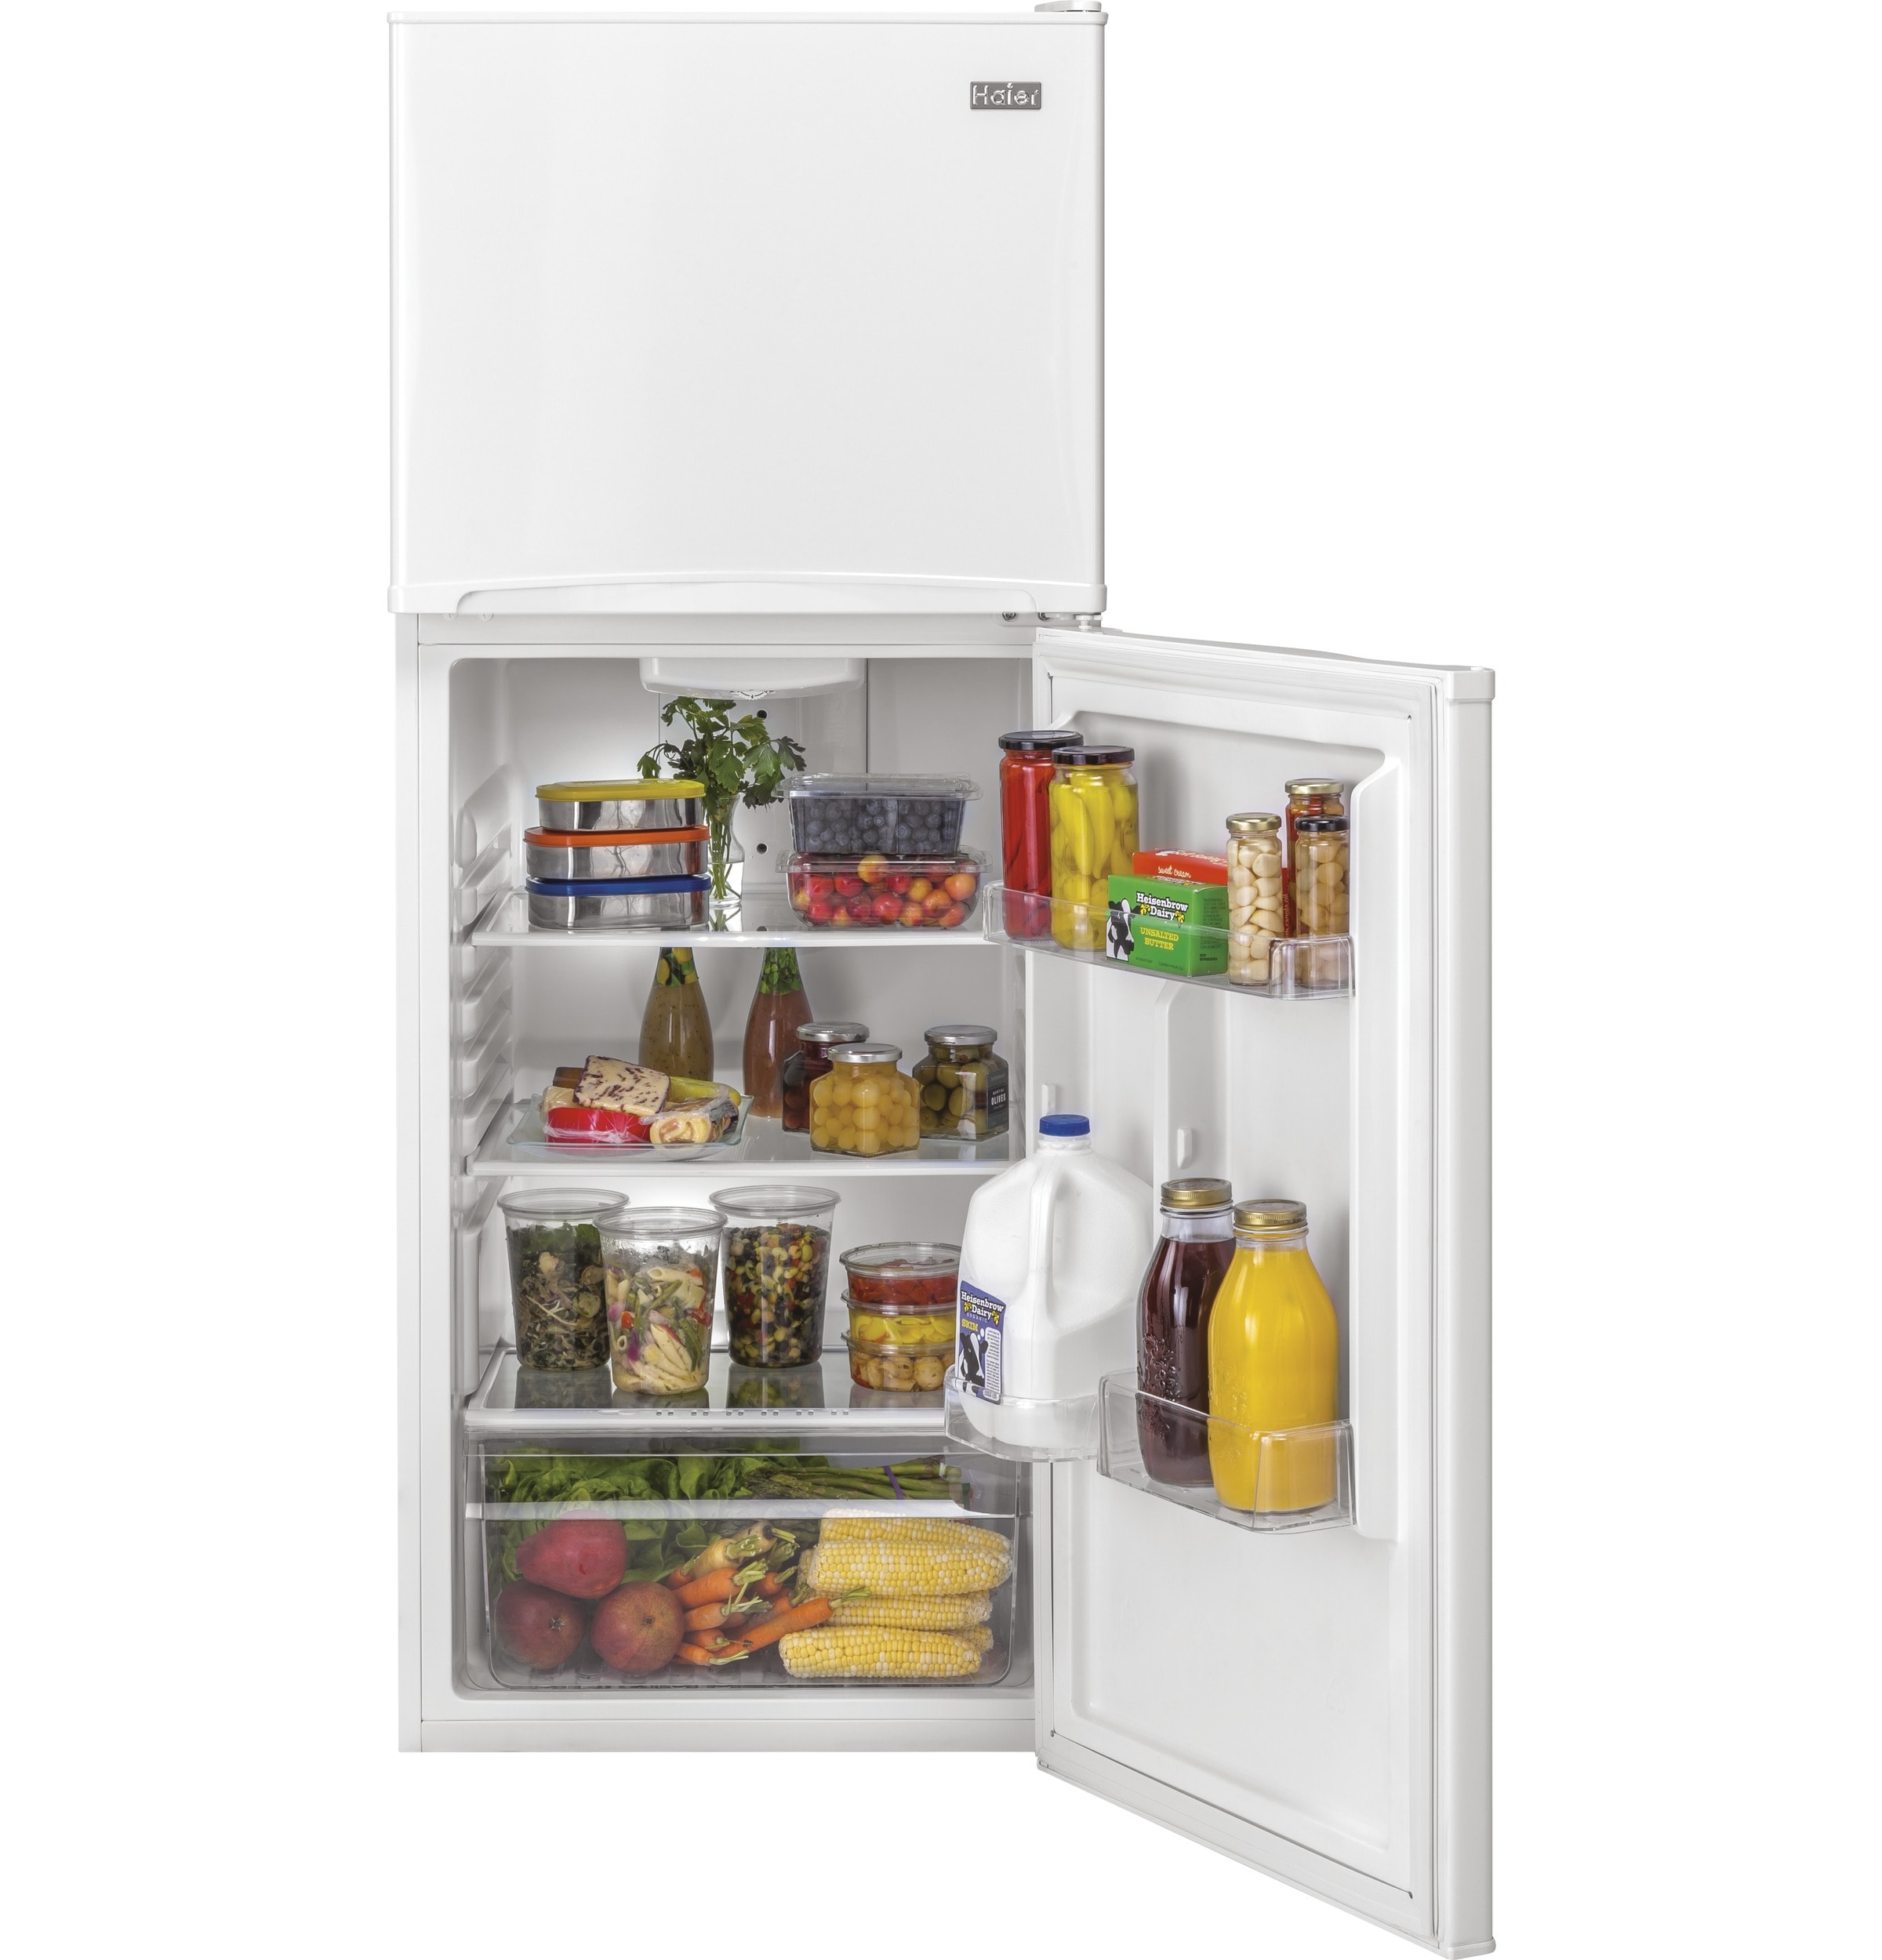 Haier 9.8-cu ft Counter-depth Top-Freezer Refrigerator (White) in 